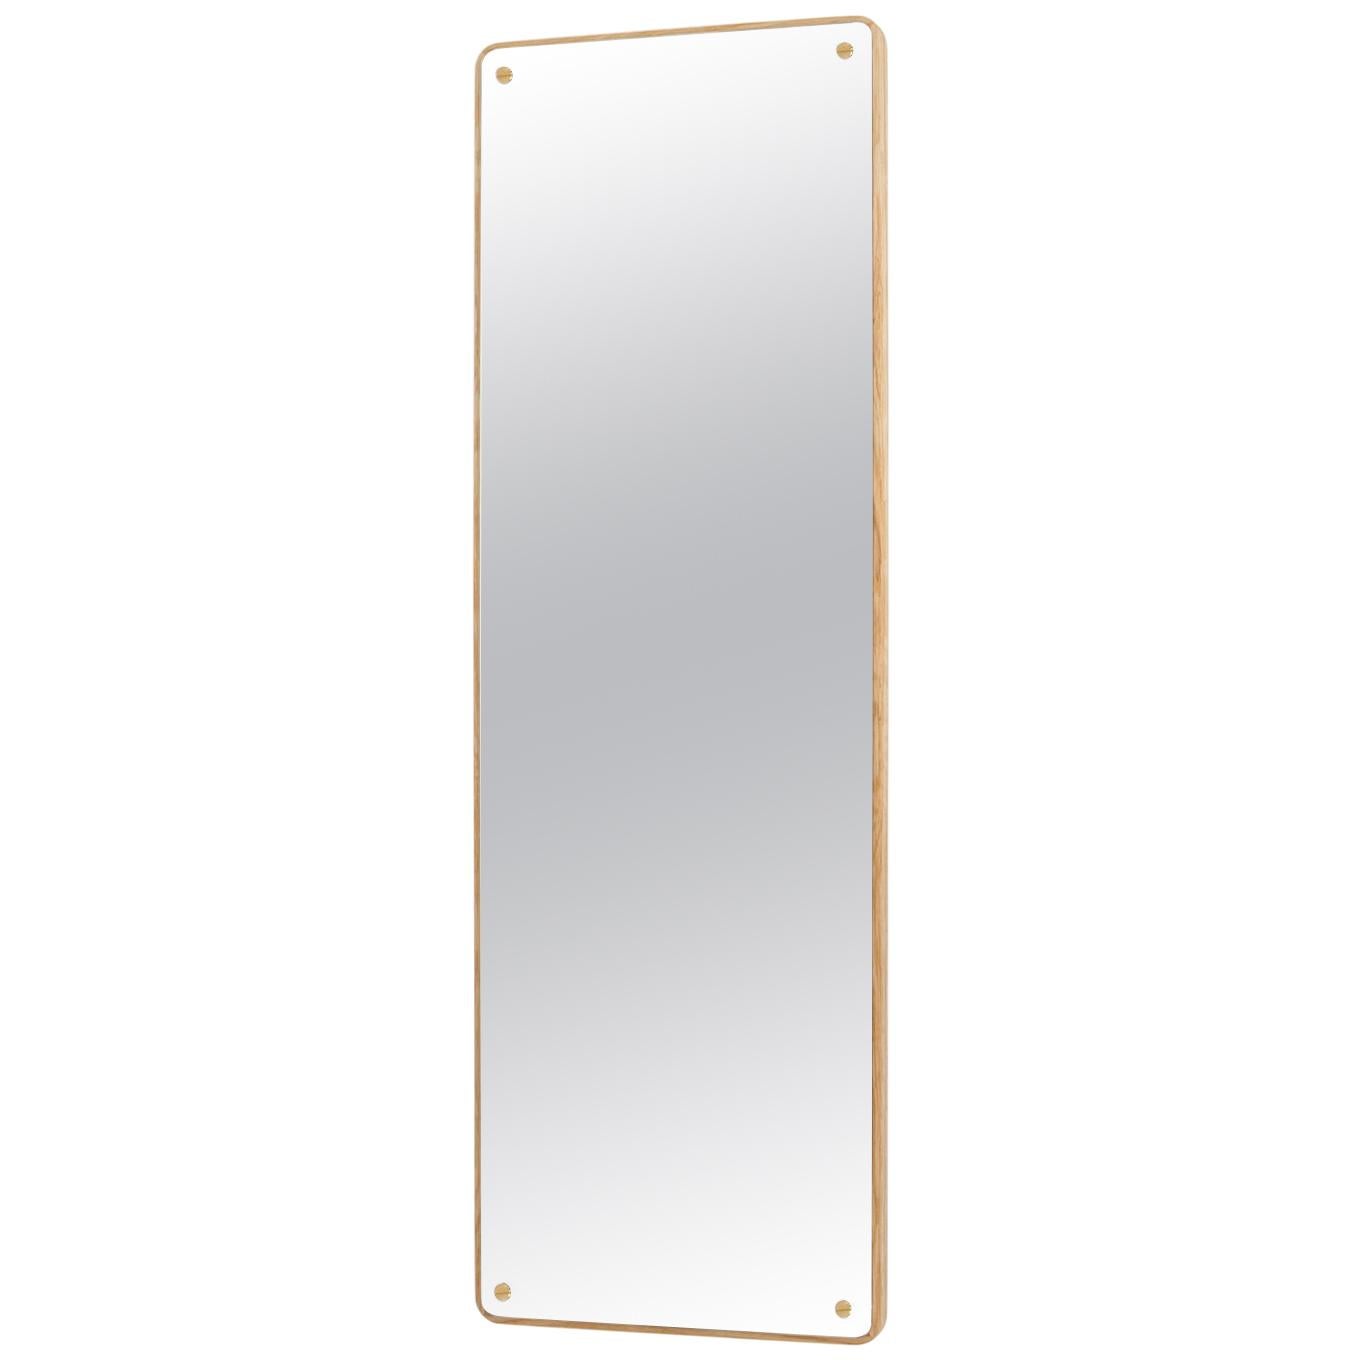 FRAMA Contemporary Design RM-1 Rectangular Mirror Large For Sale